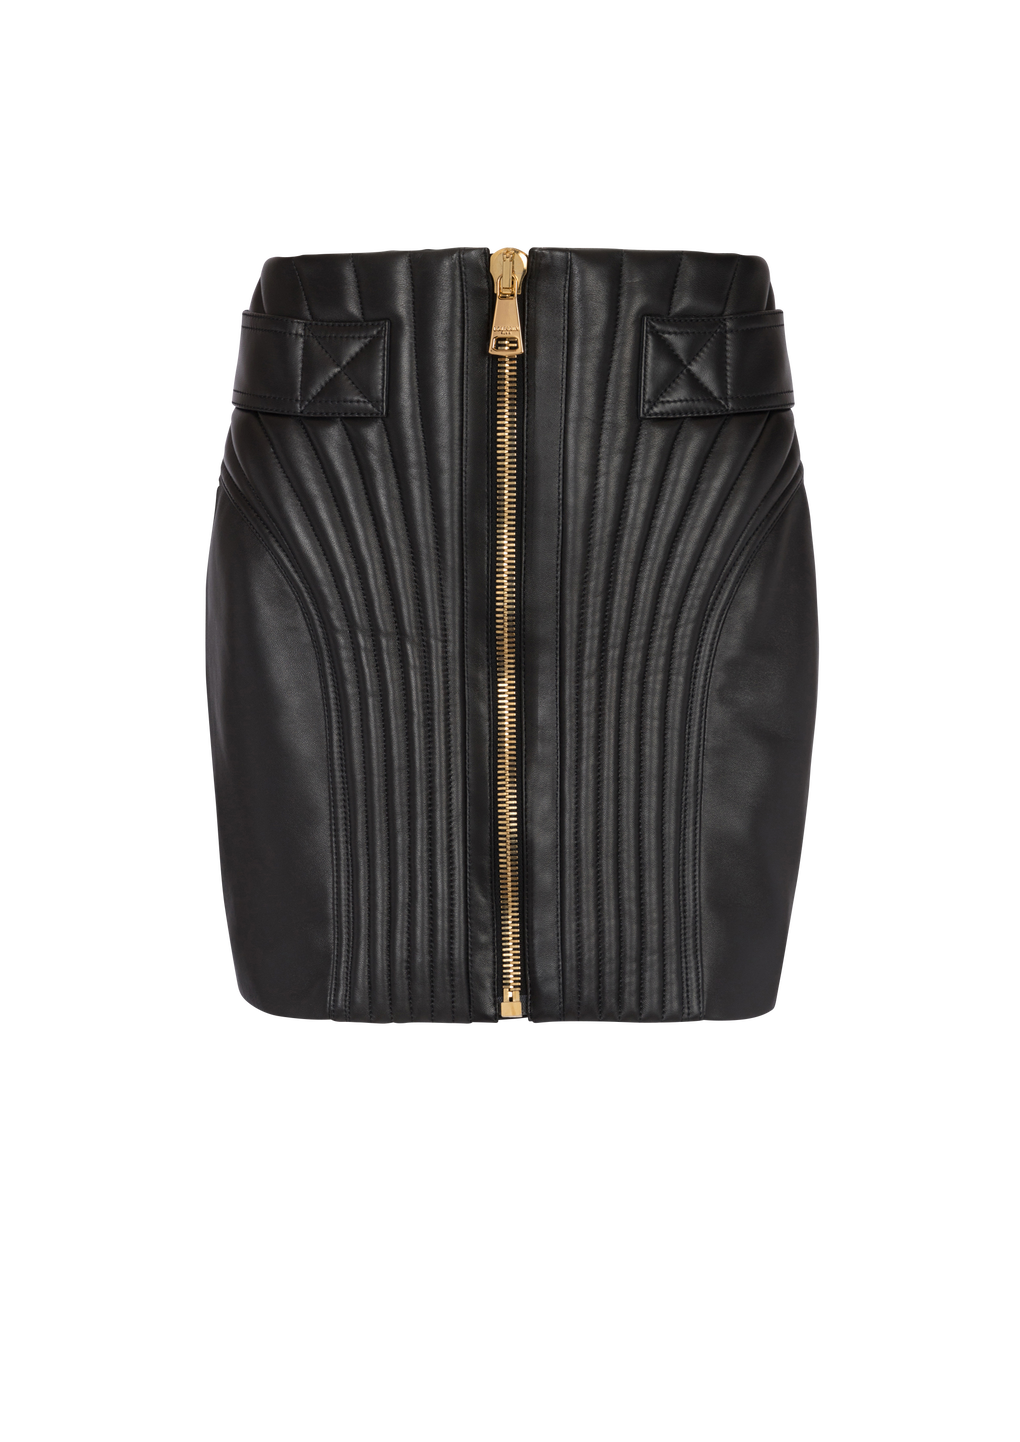 Short quilted leather skirt, black, hi-res